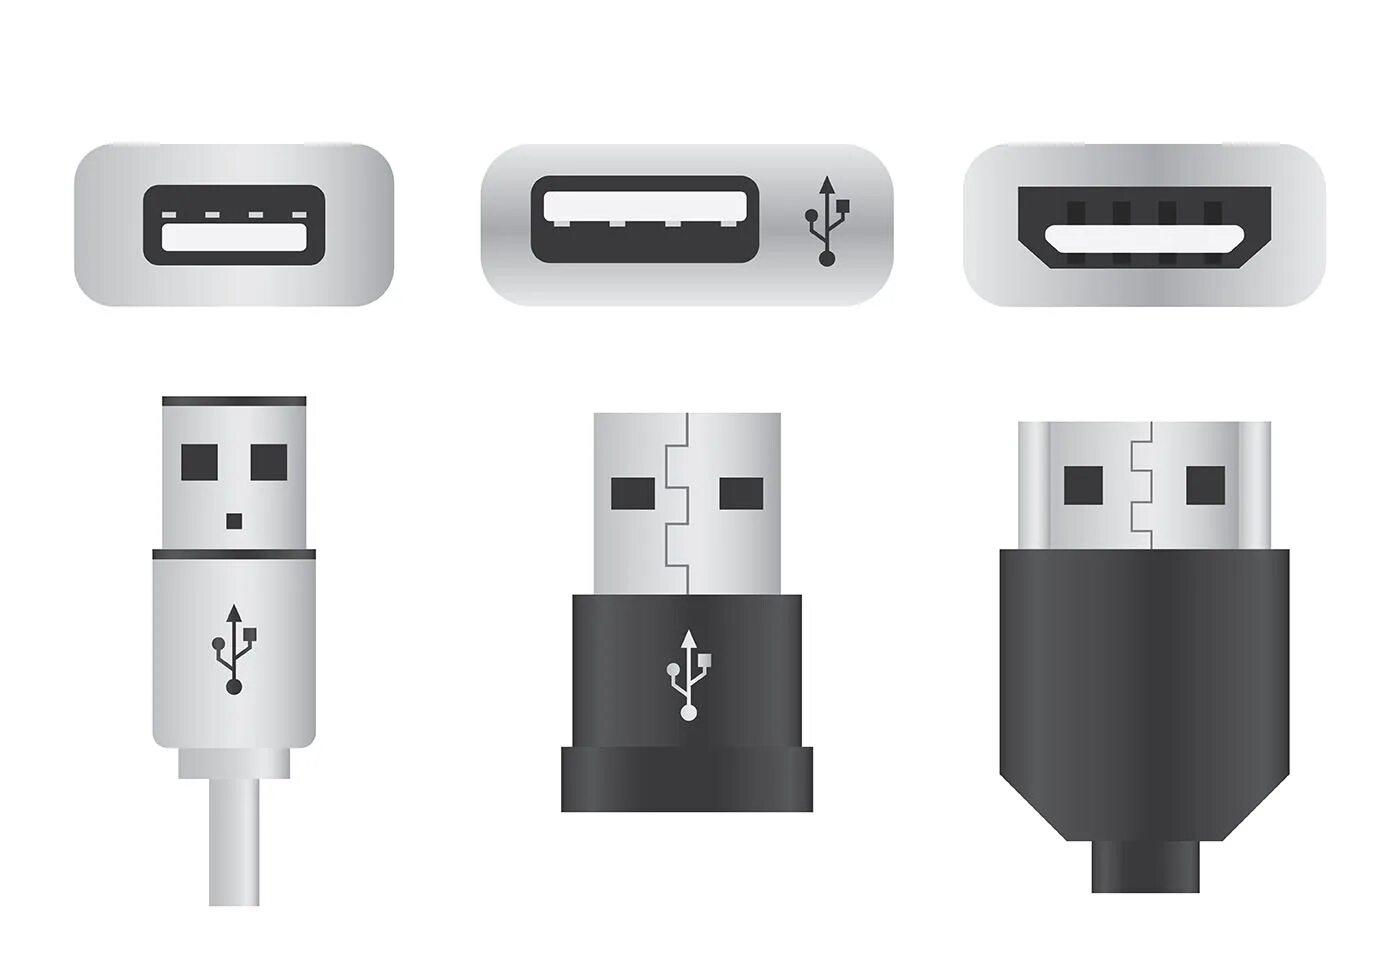 Порт USB разъем Micro-USB (USB 2.0). Юсб порт разъем. Флешка USB, Type-c, Micro USB DNS. Usb4 v2. Usb user